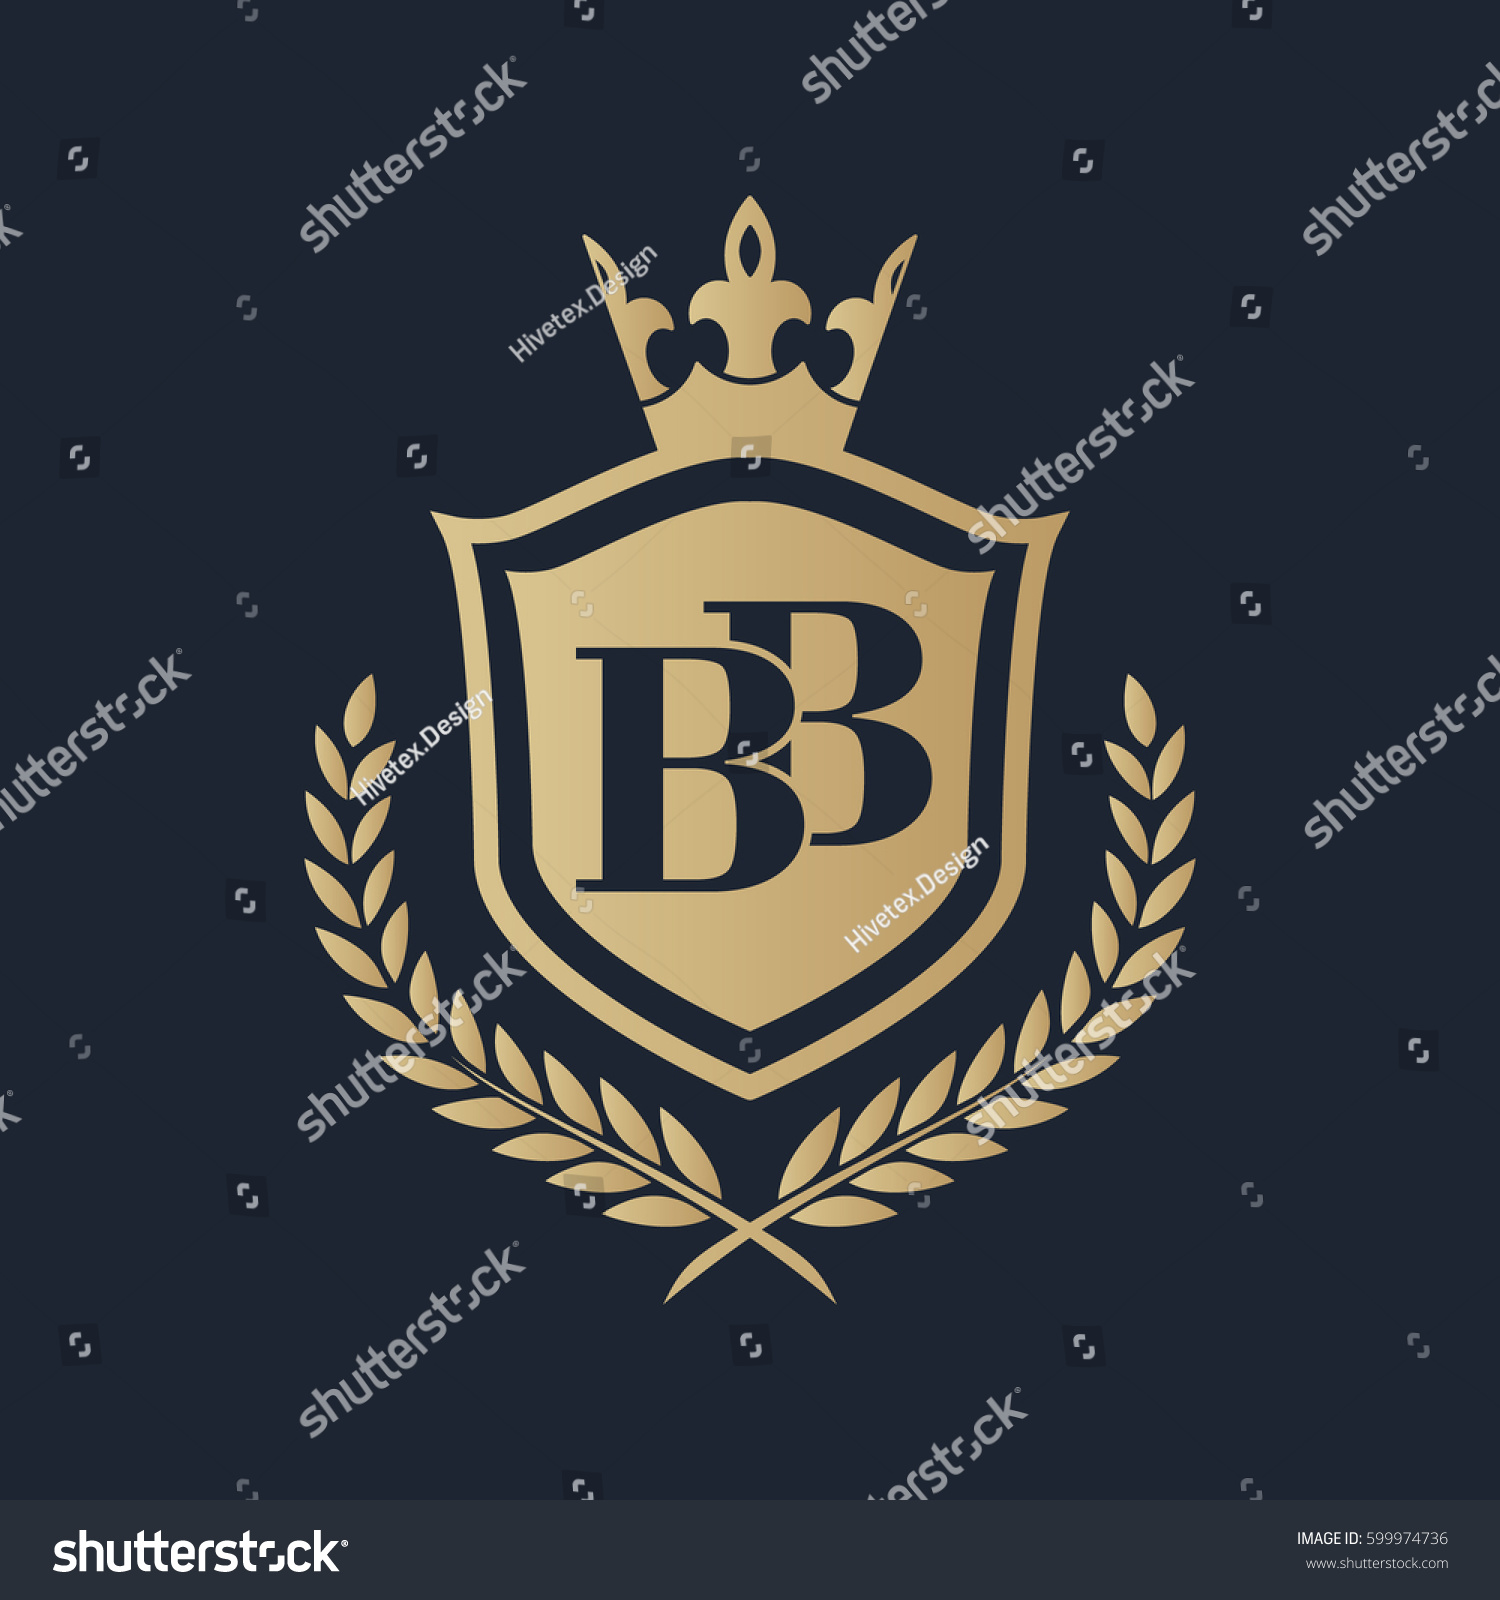 Bb Logo | Royalty-Free Stock Image